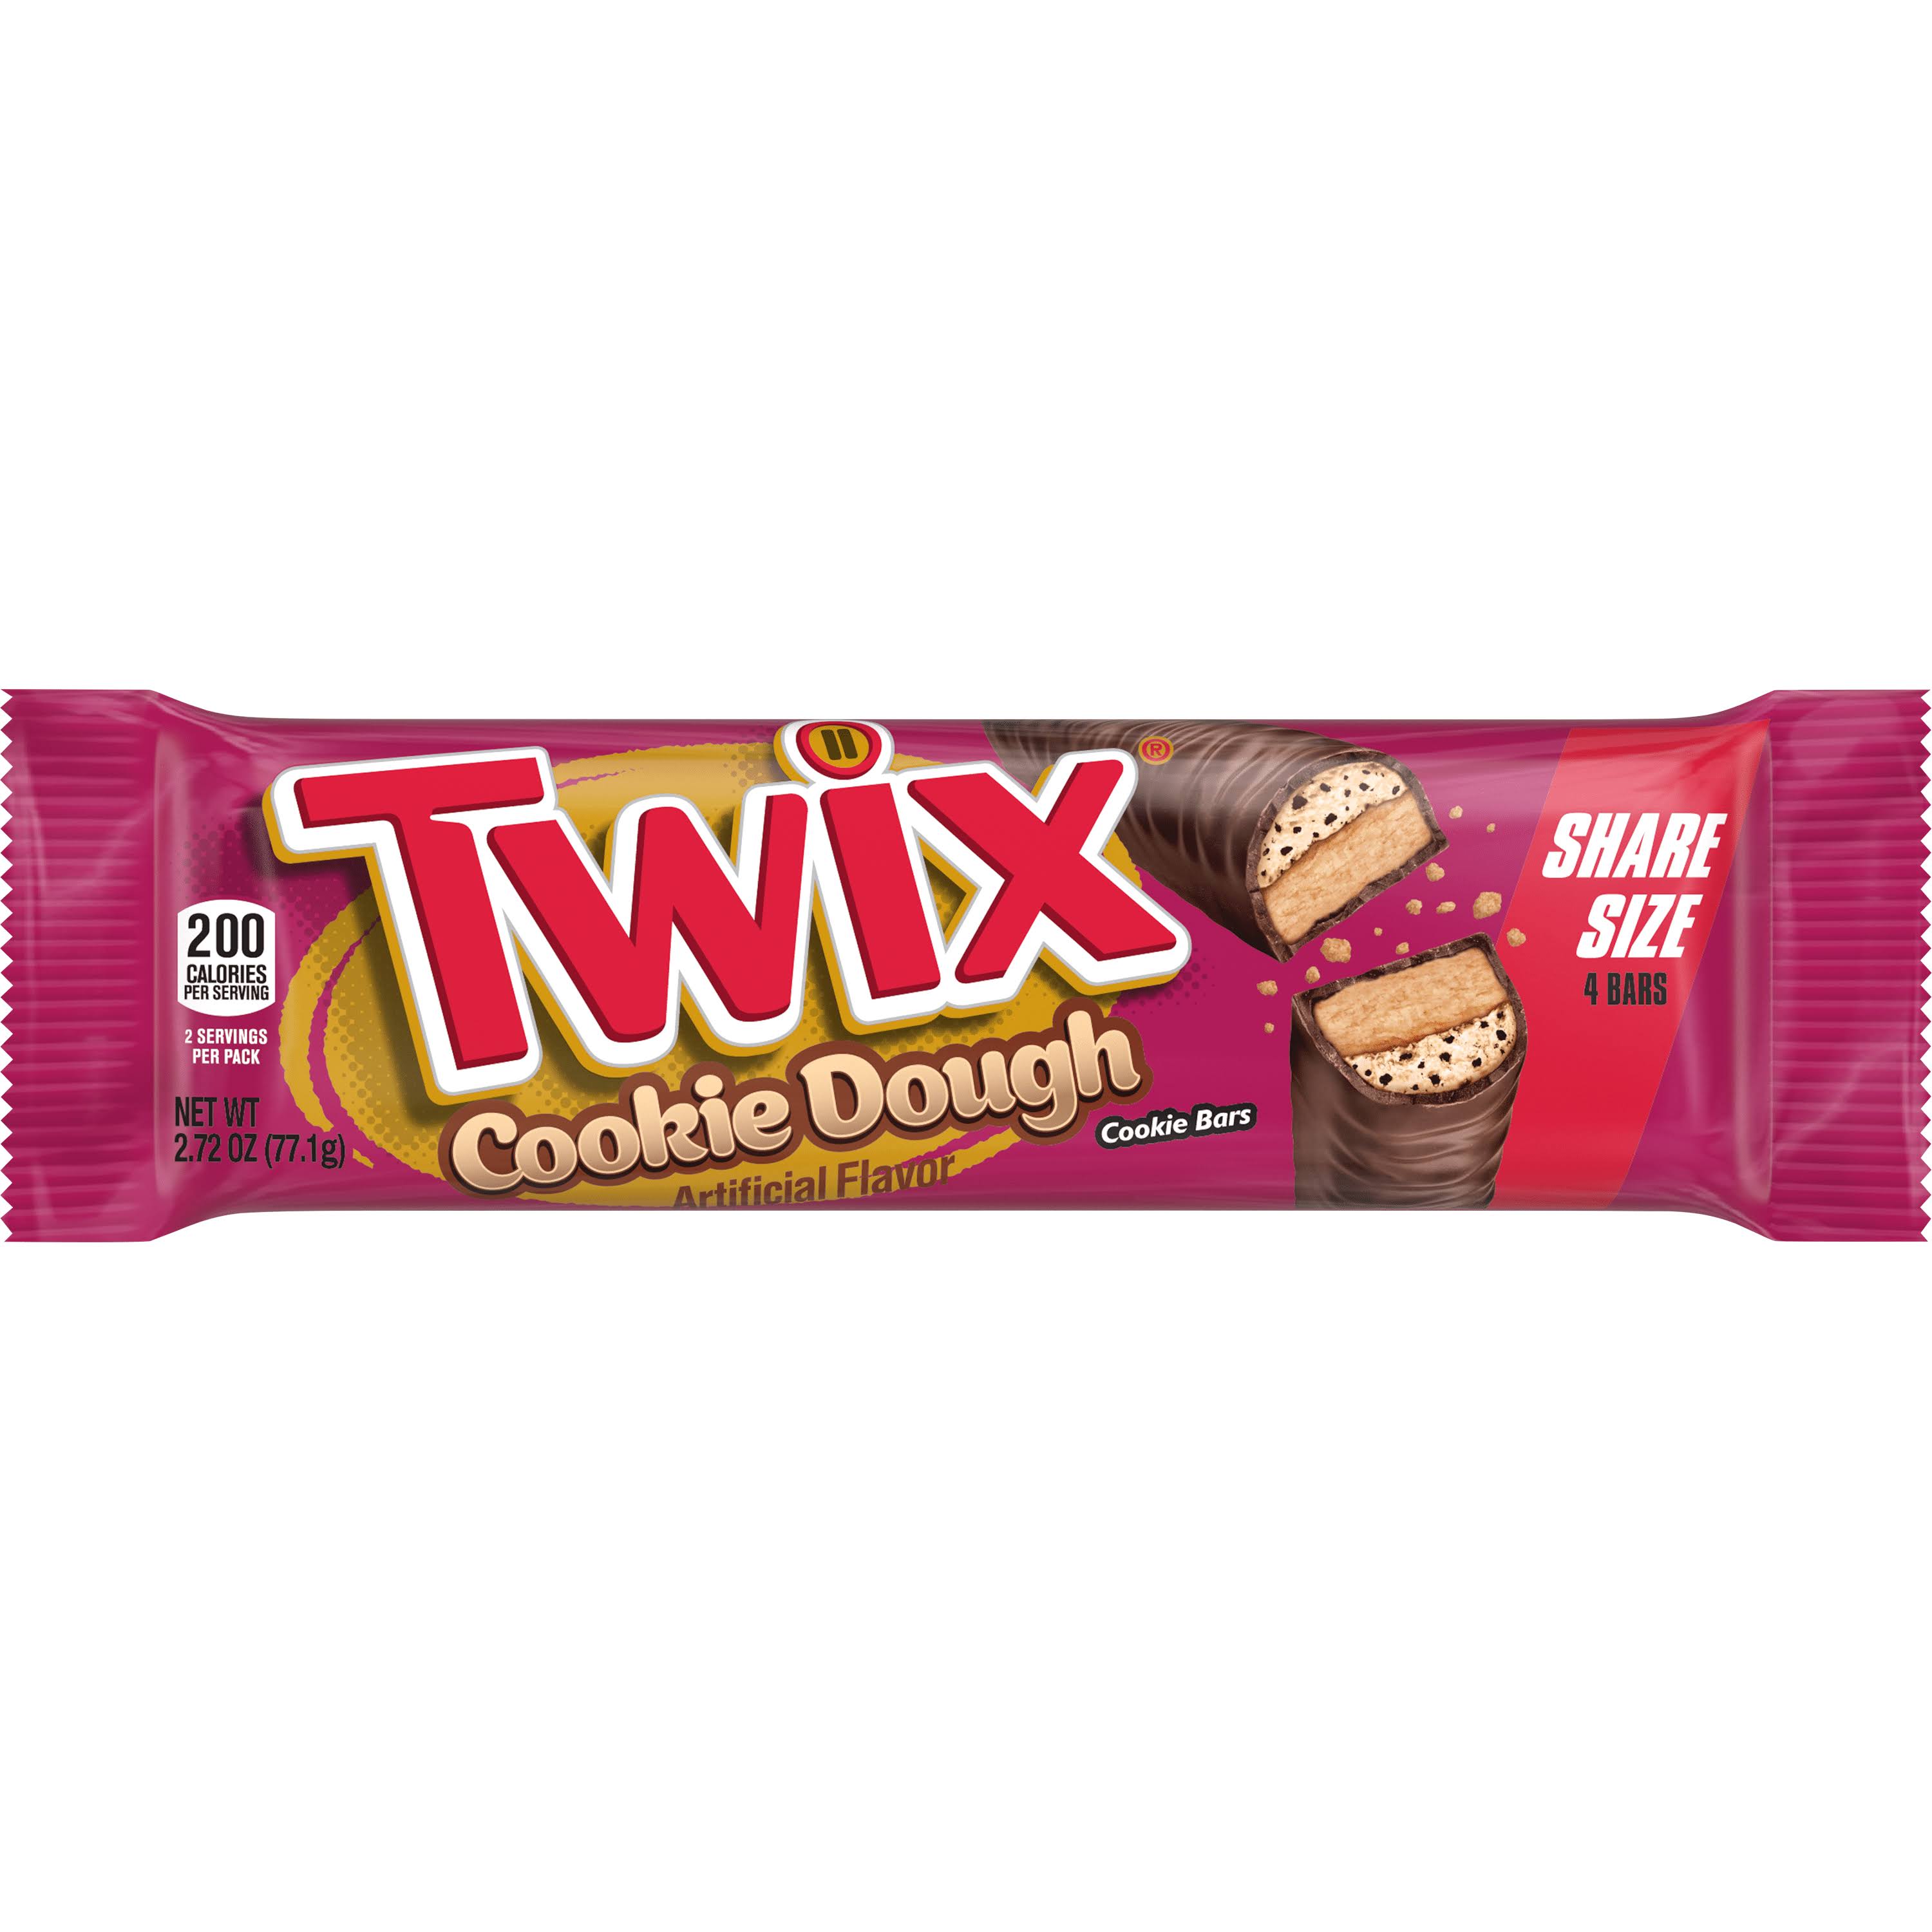 TWIX Cookie Dough - Share Size